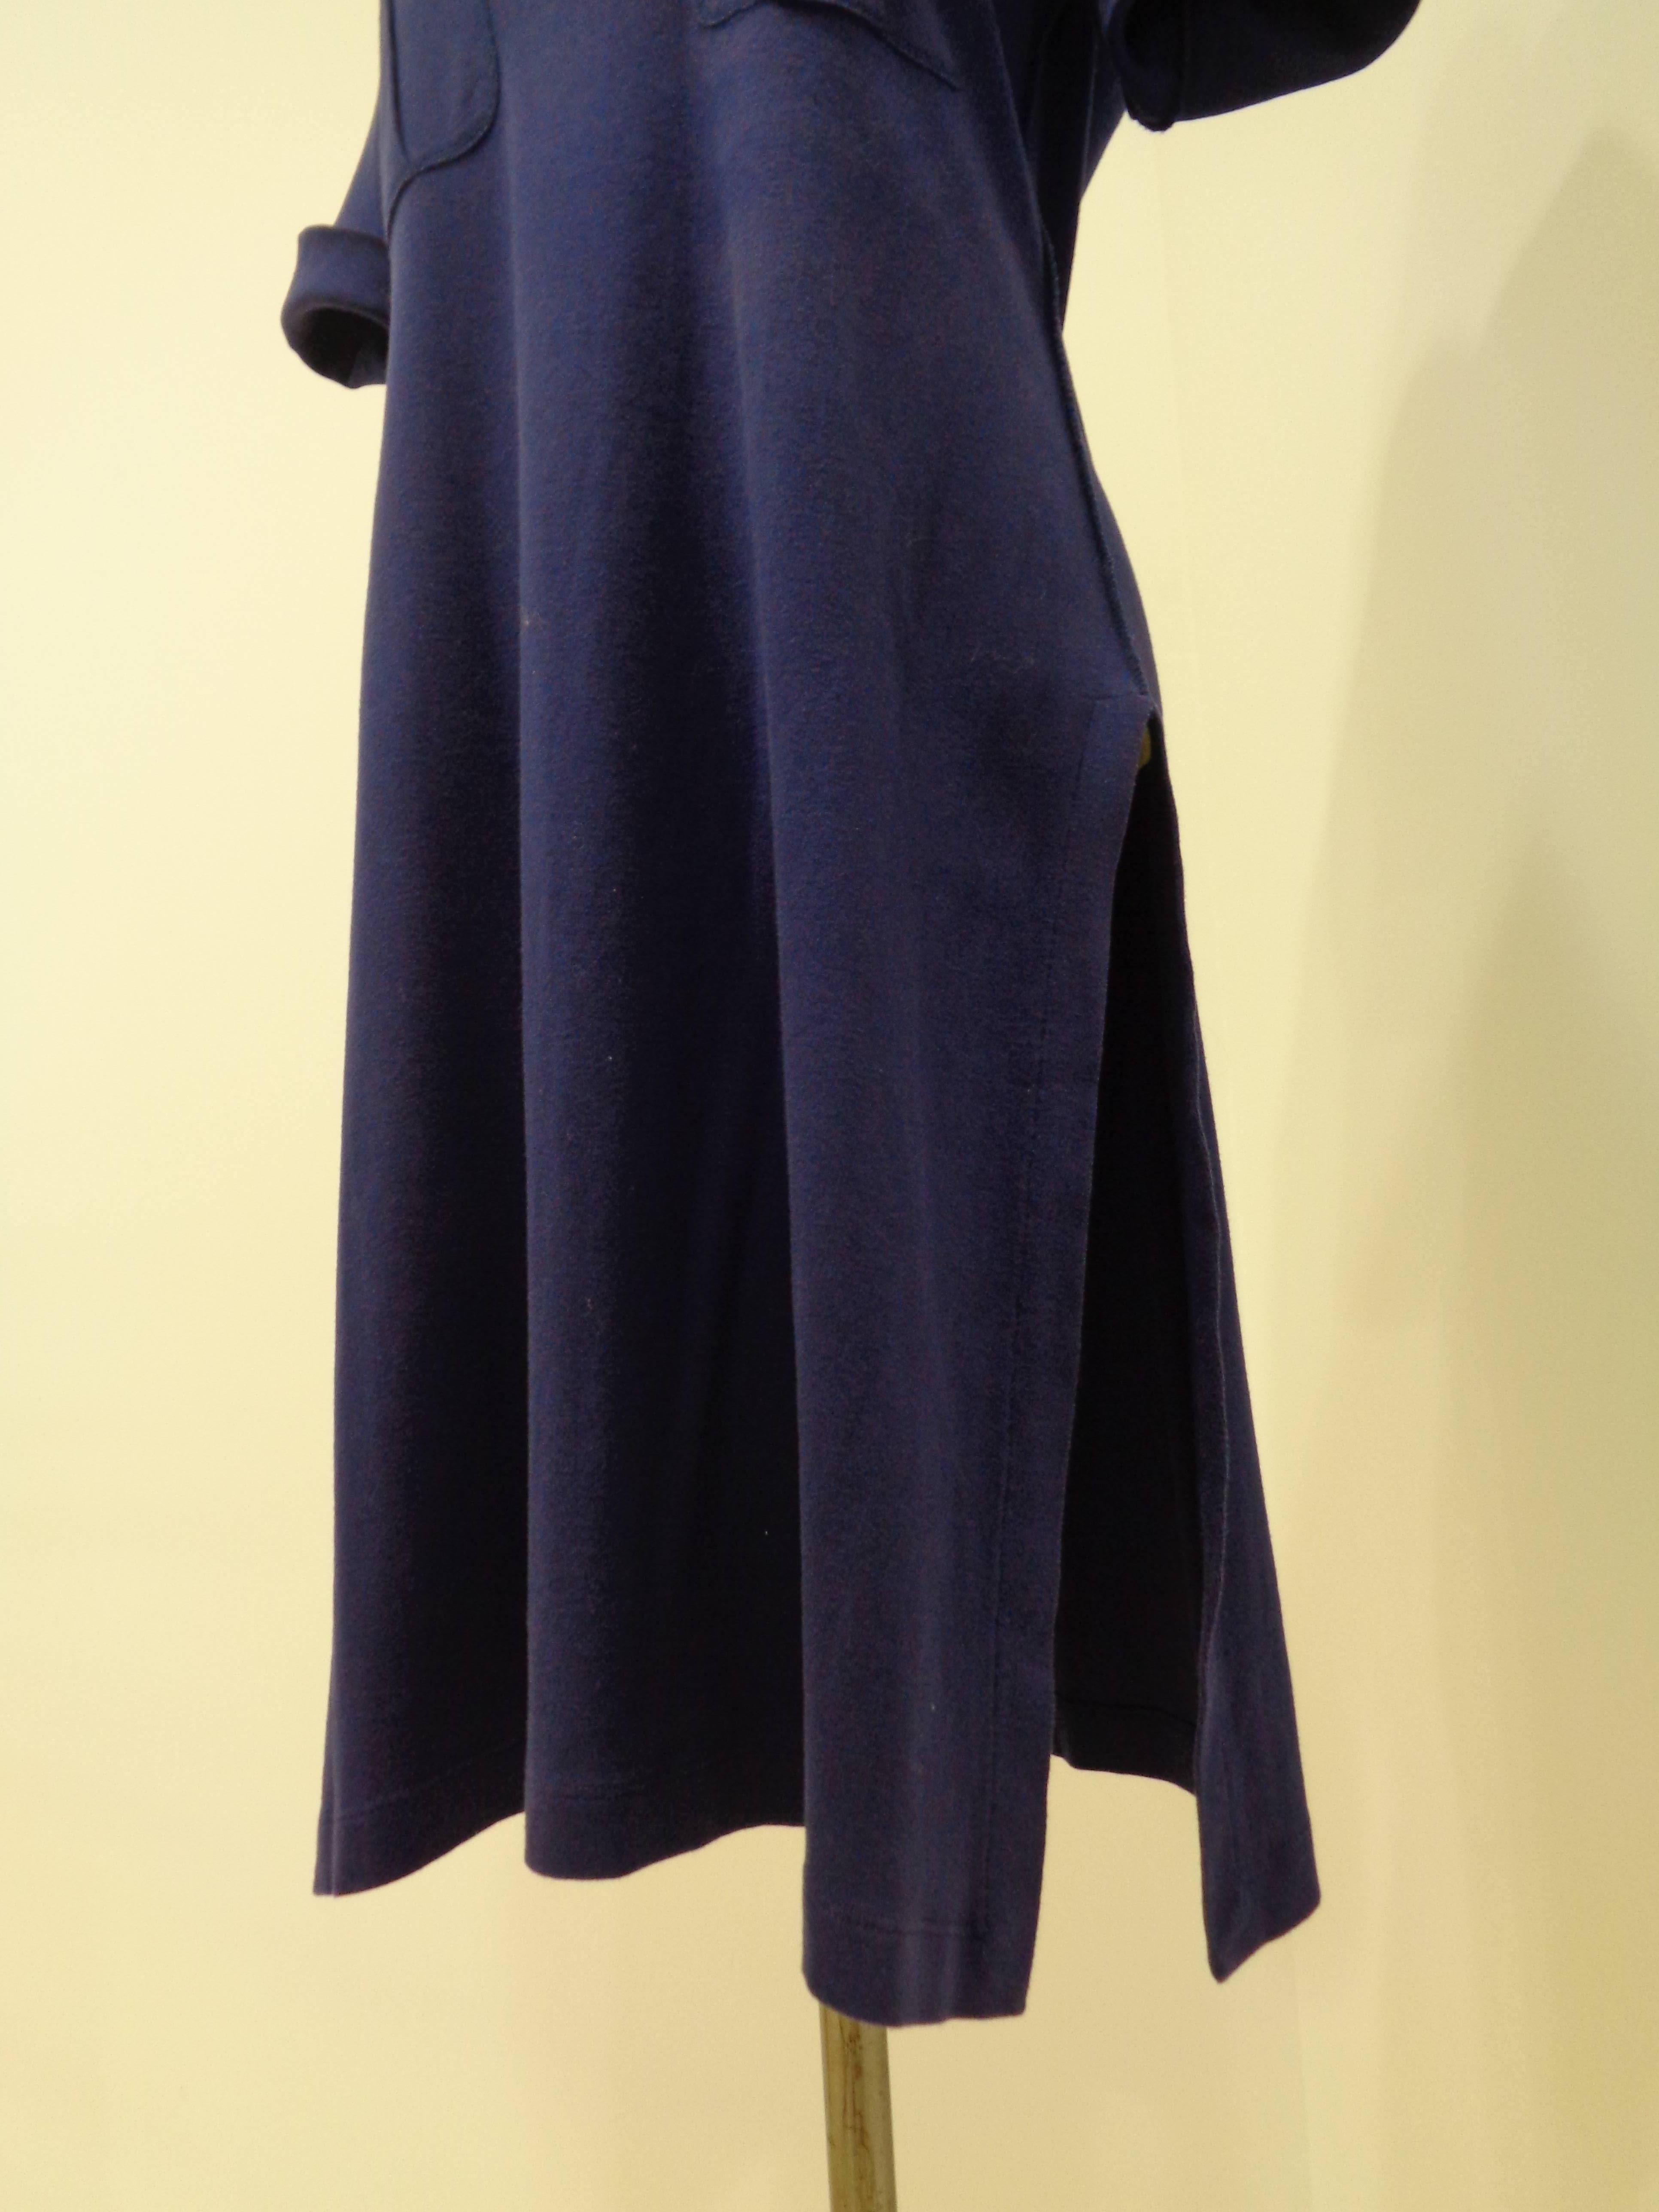 Sonia Rykiel blu dress In Excellent Condition For Sale In Capri, IT